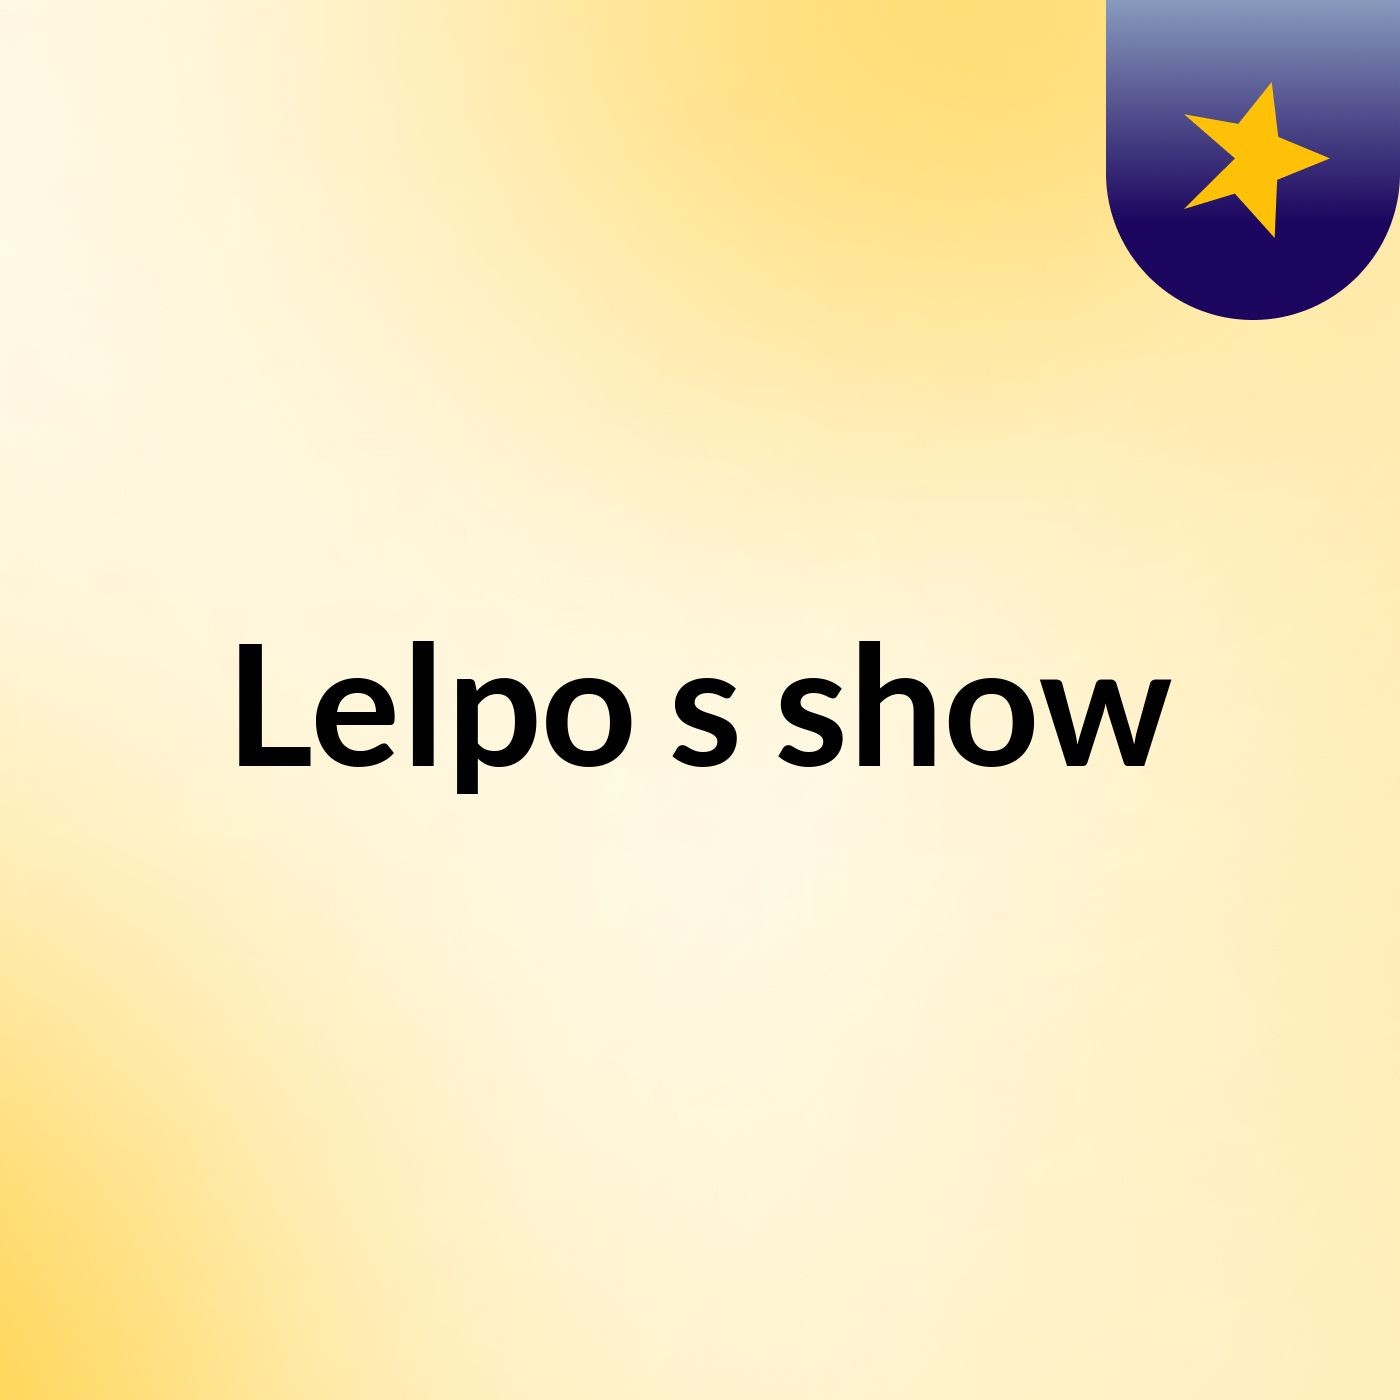 Lelpo's show